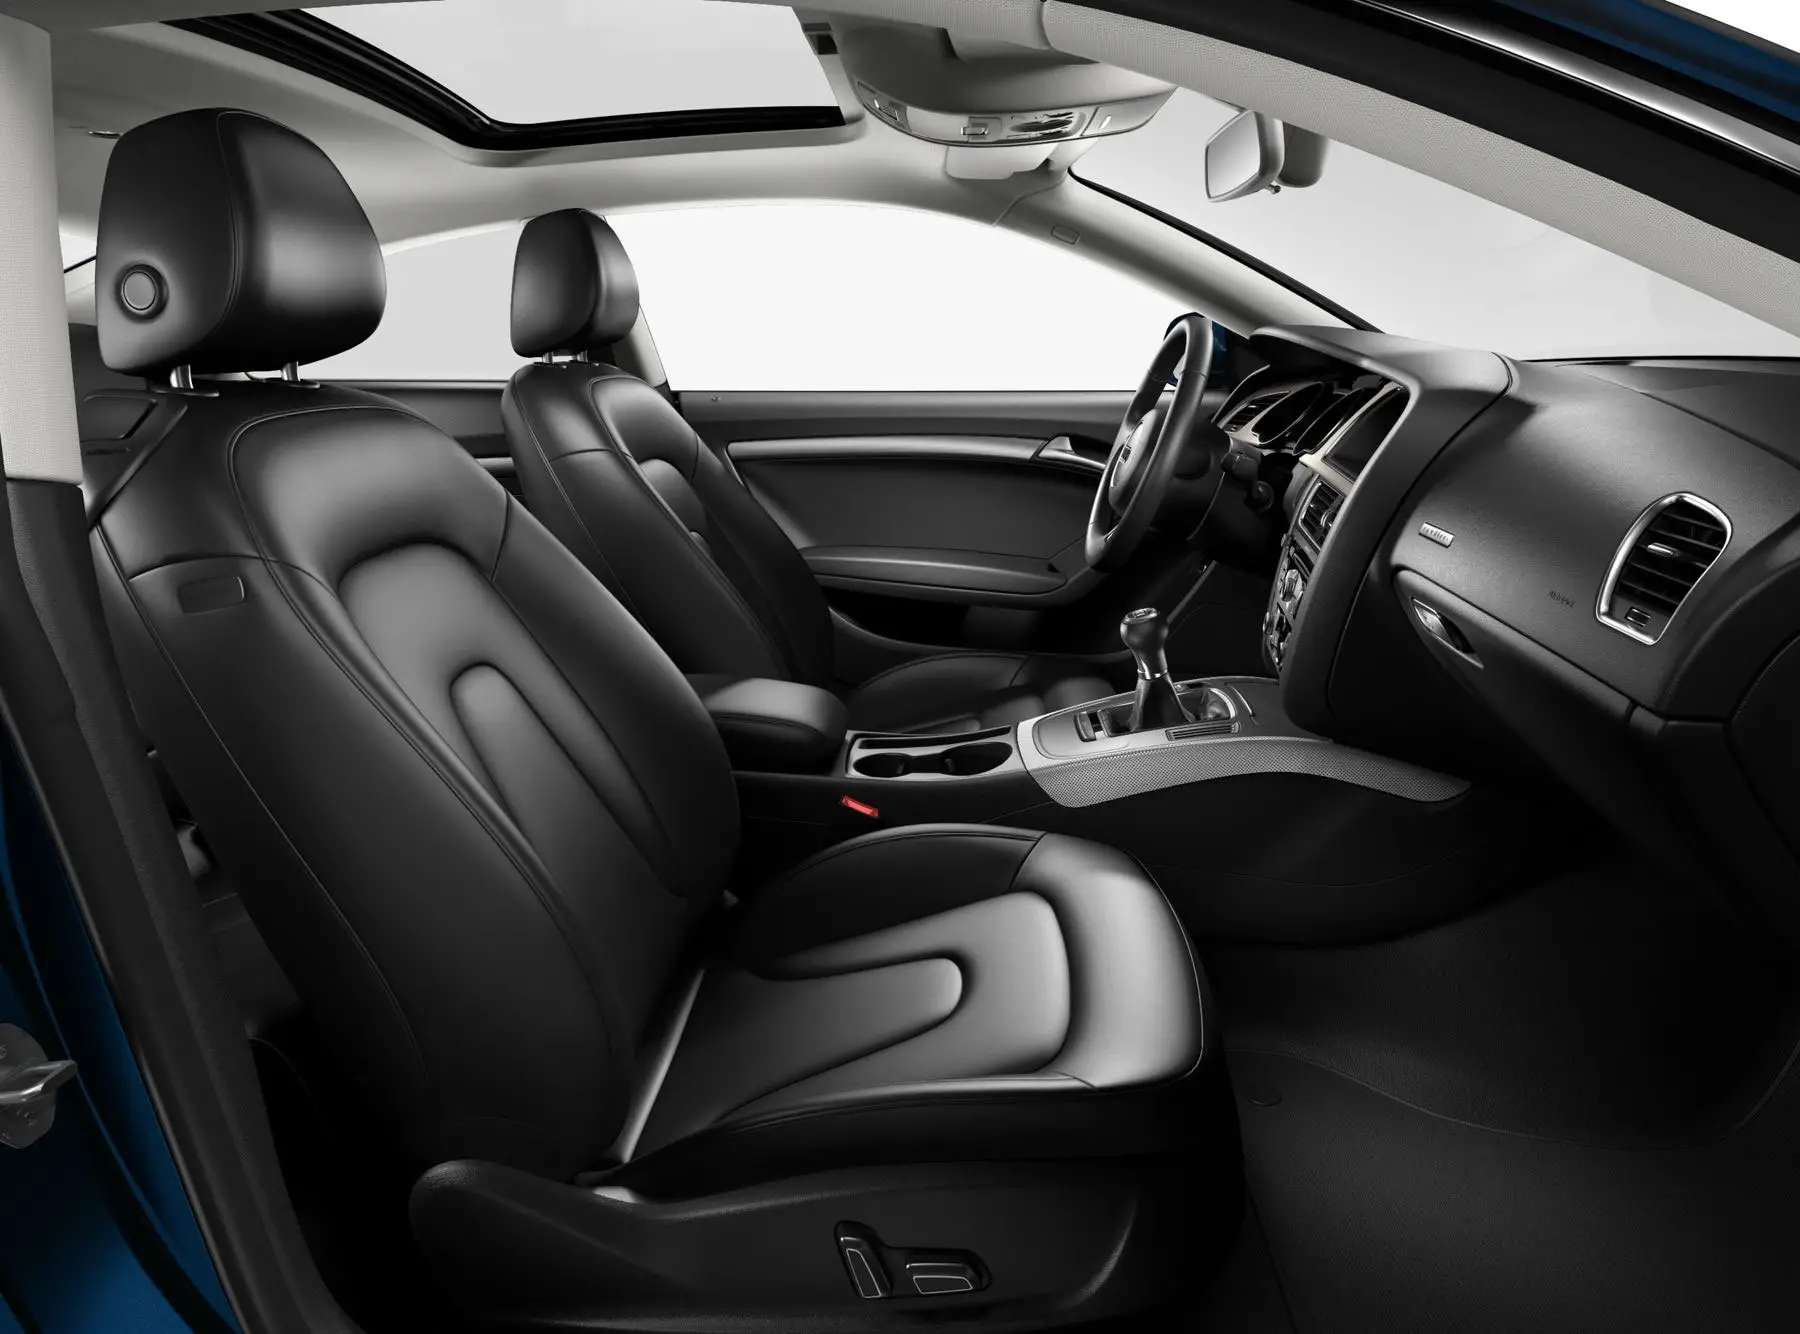 Audi A5 Premium Coupe interior front cross view